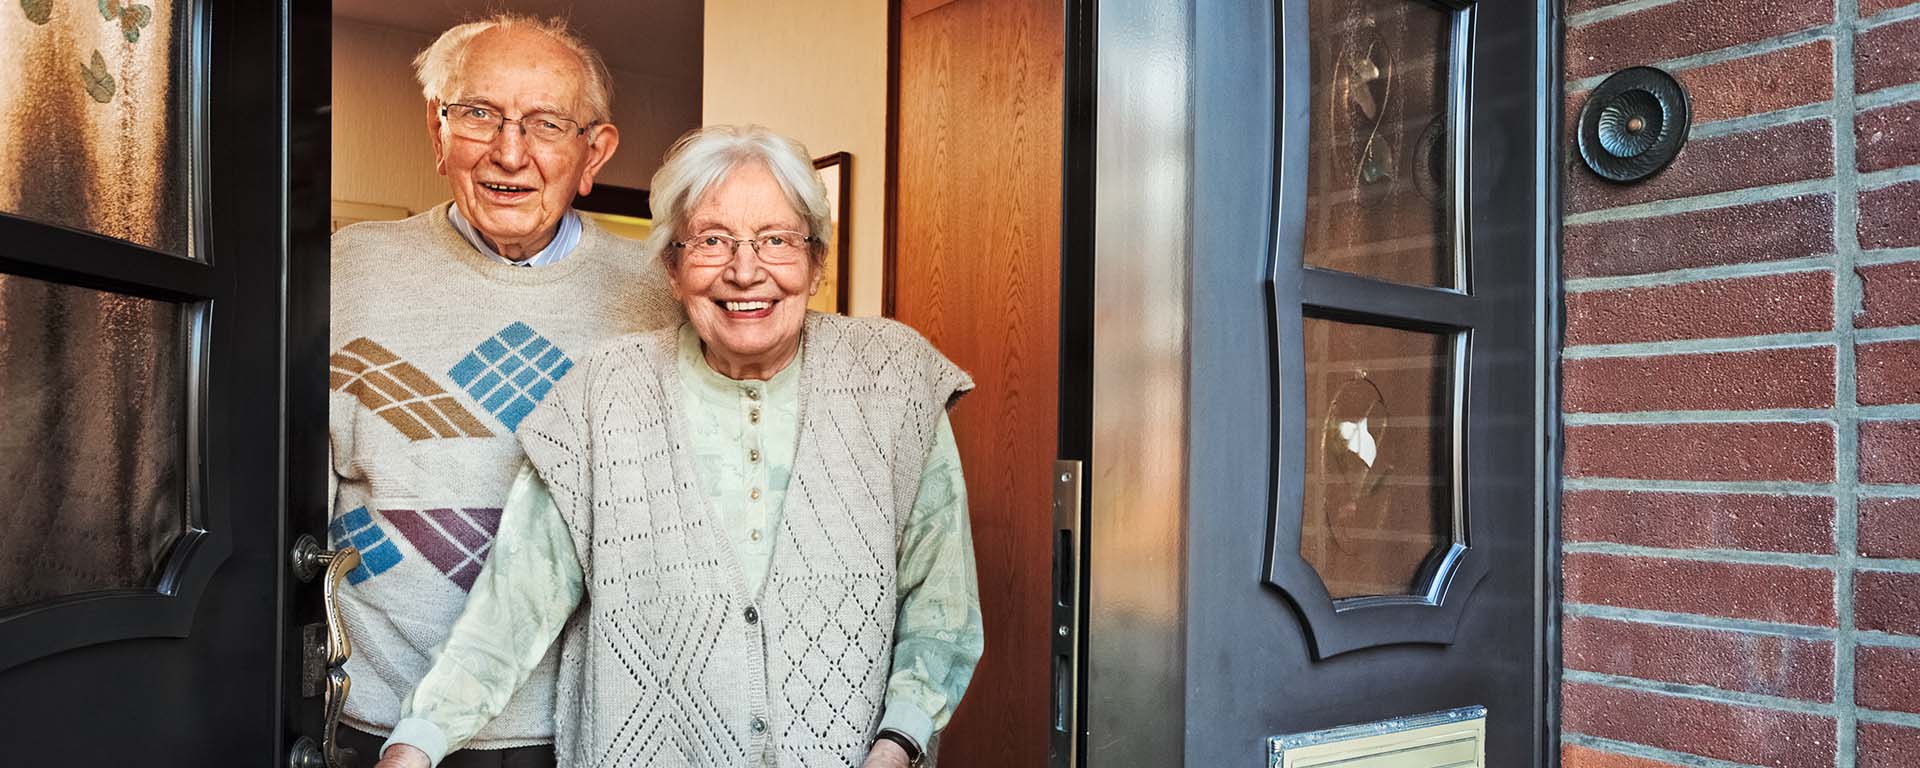 Elderly couple standing in the doorway of their home.